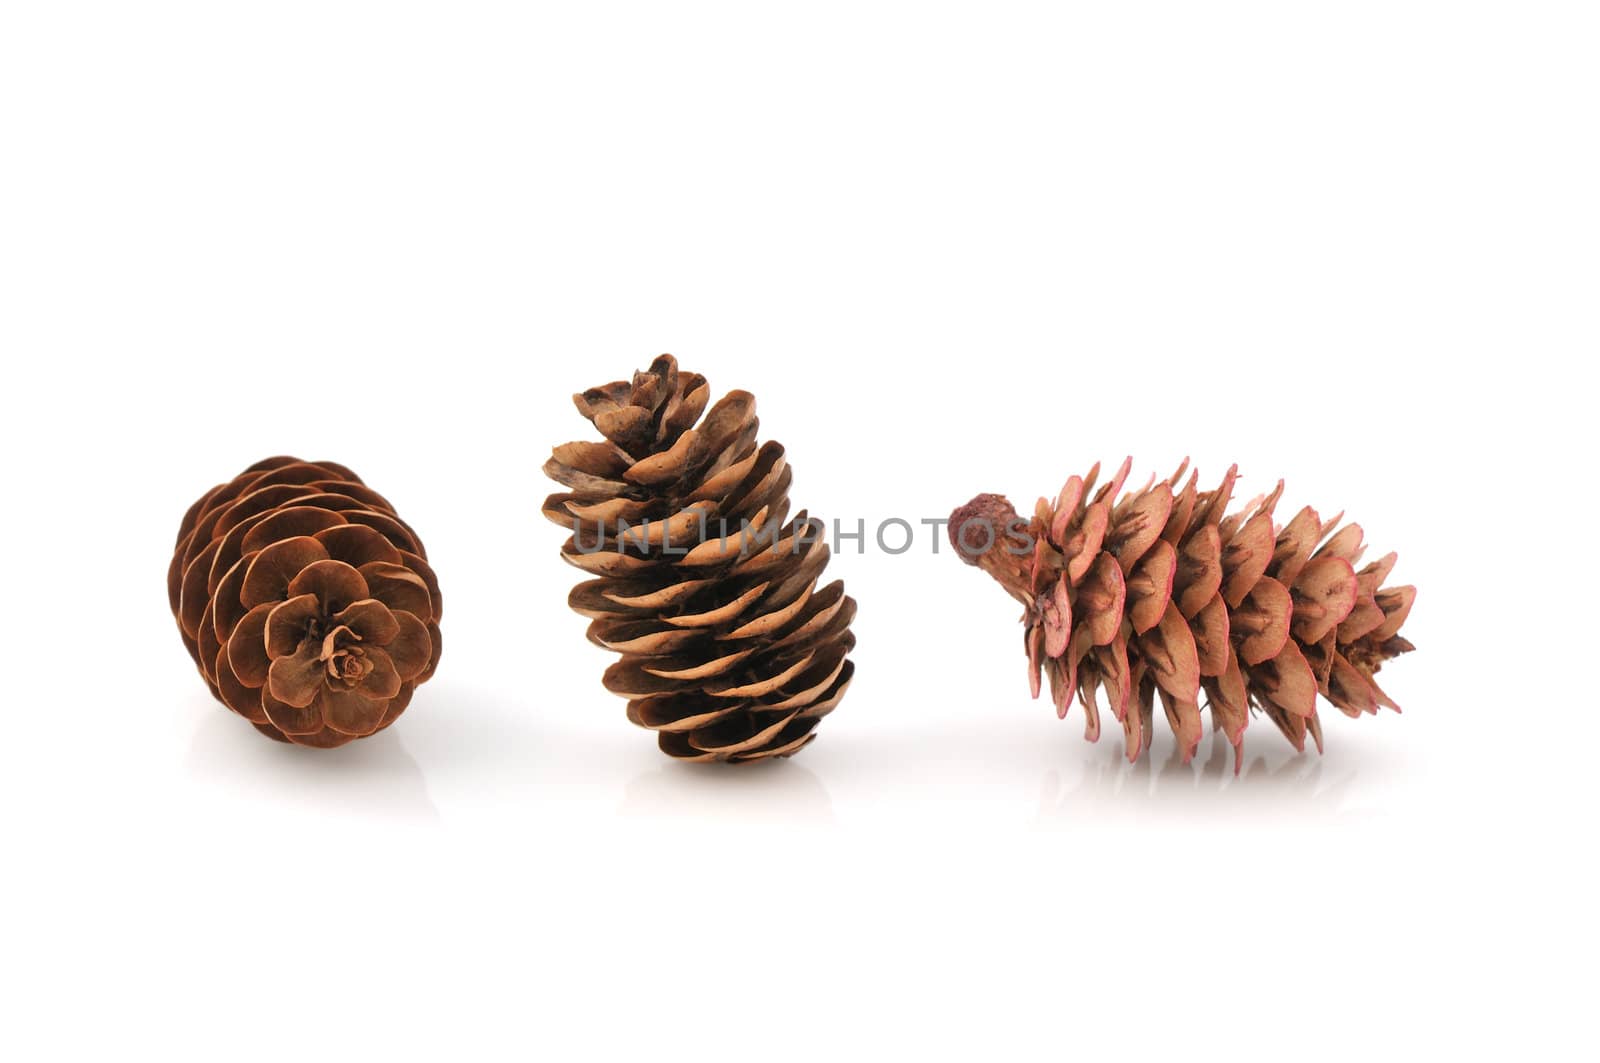 Pine cones by Hbak